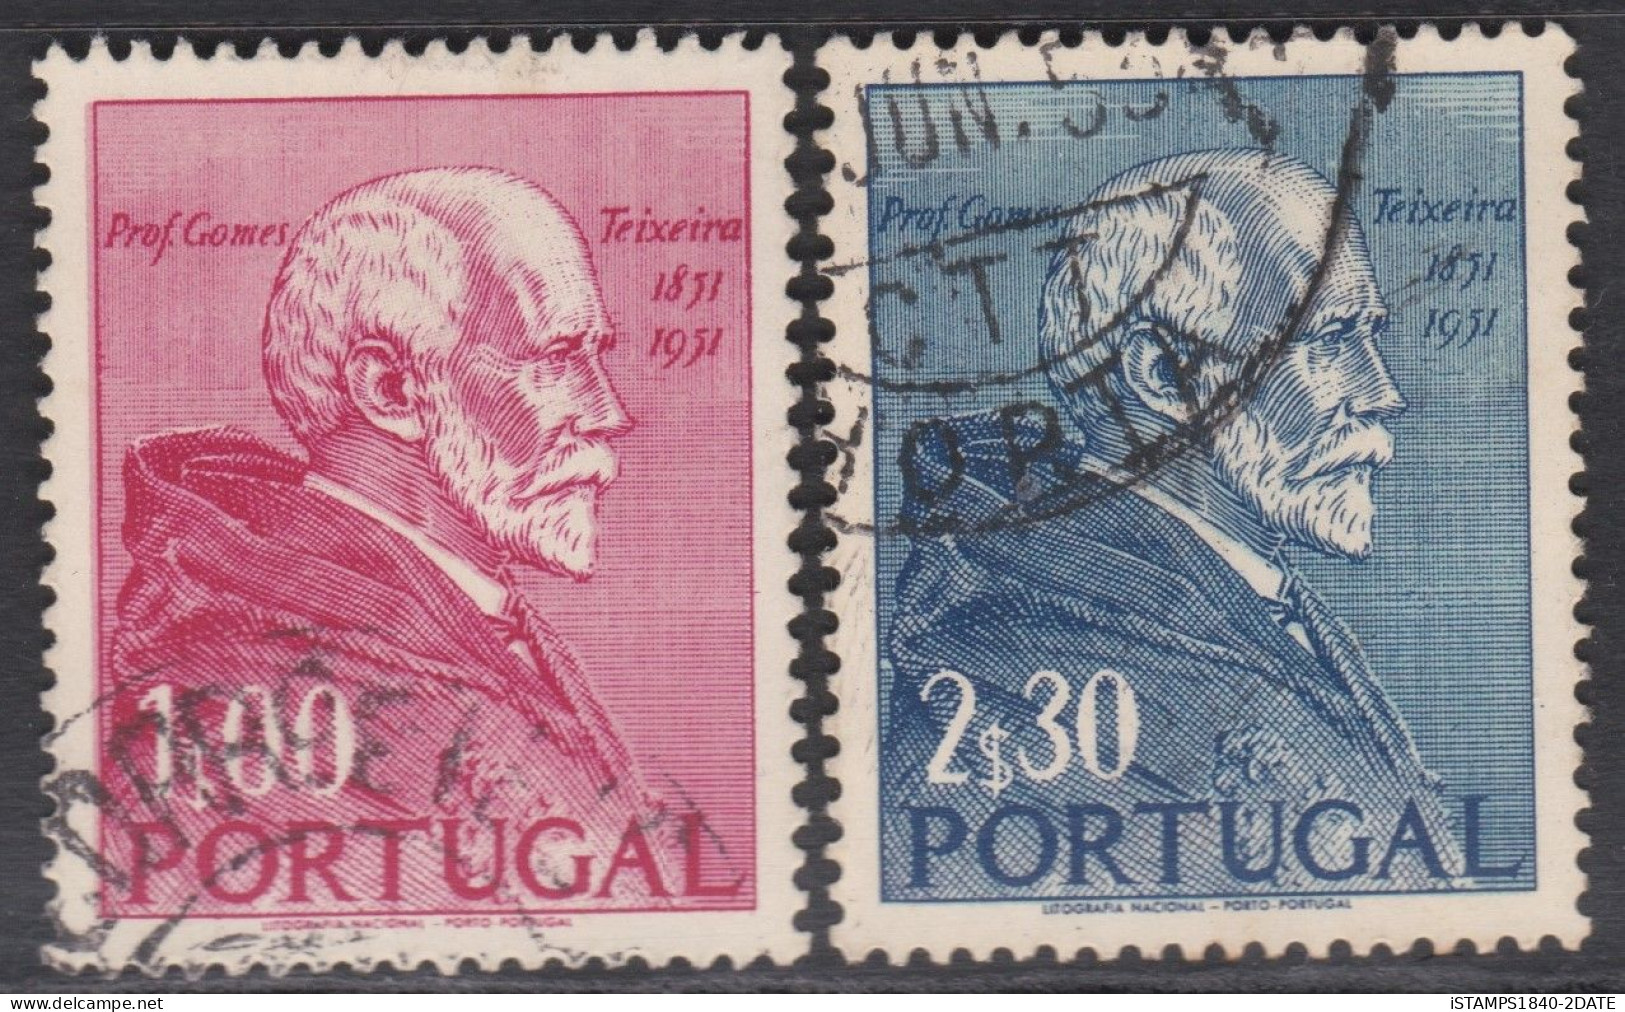 00486/ Portugal 1952 Sg1069/70 Fine Used Set Of 2 Birth Centenary Of Professor Gomes Cv £7 - Unused Stamps